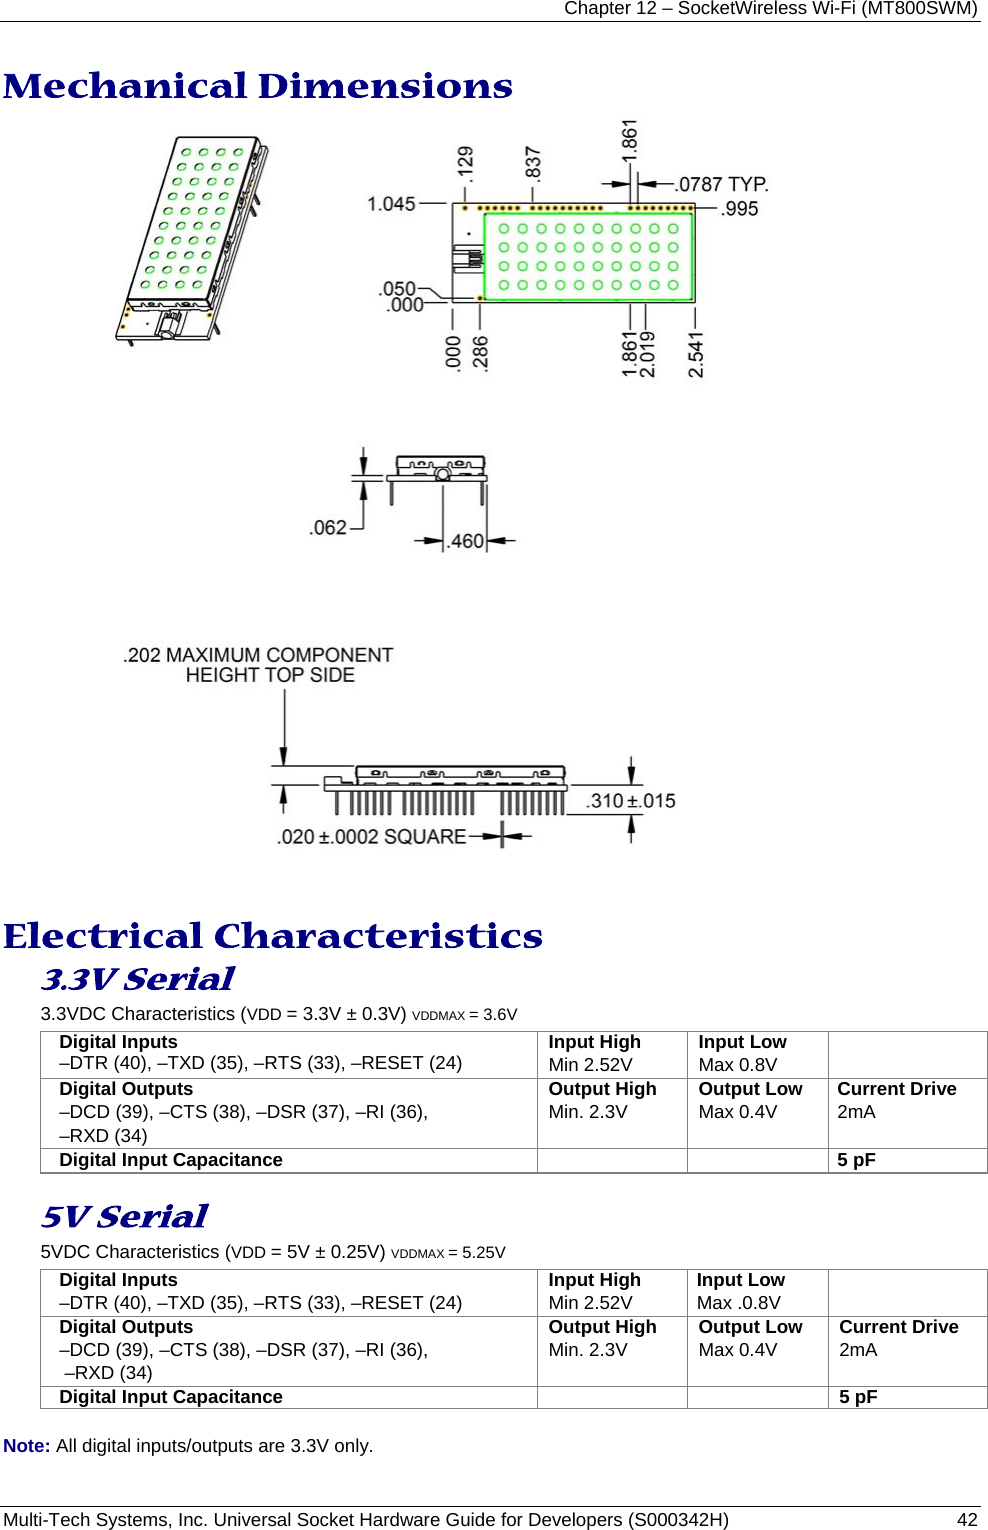 Chapter 12 – SocketWireless Wi-Fi (MT800SWM) Multi-Tech Systems, Inc. Universal Socket Hardware Guide for Developers (S000342H)  42  Mechanical Dimensions    Electrical Characteristics 3.3V Serial 3.3VDC Characteristics (VDD = 3.3V ± 0.3V) VDDMAX = 3.6V   Digital Inputs –DTR (40), –TXD (35), –RTS (33), –RESET (24) Input High Min 2.52V Input Low Max 0.8V  Digital Outputs –DCD (39), –CTS (38), –DSR (37), –RI (36),  –RXD (34) Output High Min. 2.3V Output Low Max 0.4V Current Drive 2mA Digital Input Capacitance    5 pF  5V Serial  5VDC Characteristics (VDD = 5V ± 0.25V) VDDMAX = 5.25V   Digital Inputs –DTR (40), –TXD (35), –RTS (33), –RESET (24) Input High Min 2.52V Input Low Max .0.8V  Digital Outputs –DCD (39), –CTS (38), –DSR (37), –RI (36),  –RXD (34) Output High Min. 2.3V Output Low Max 0.4V Current Drive 2mA Digital Input Capacitance    5 pF  Note: All digital inputs/outputs are 3.3V only.